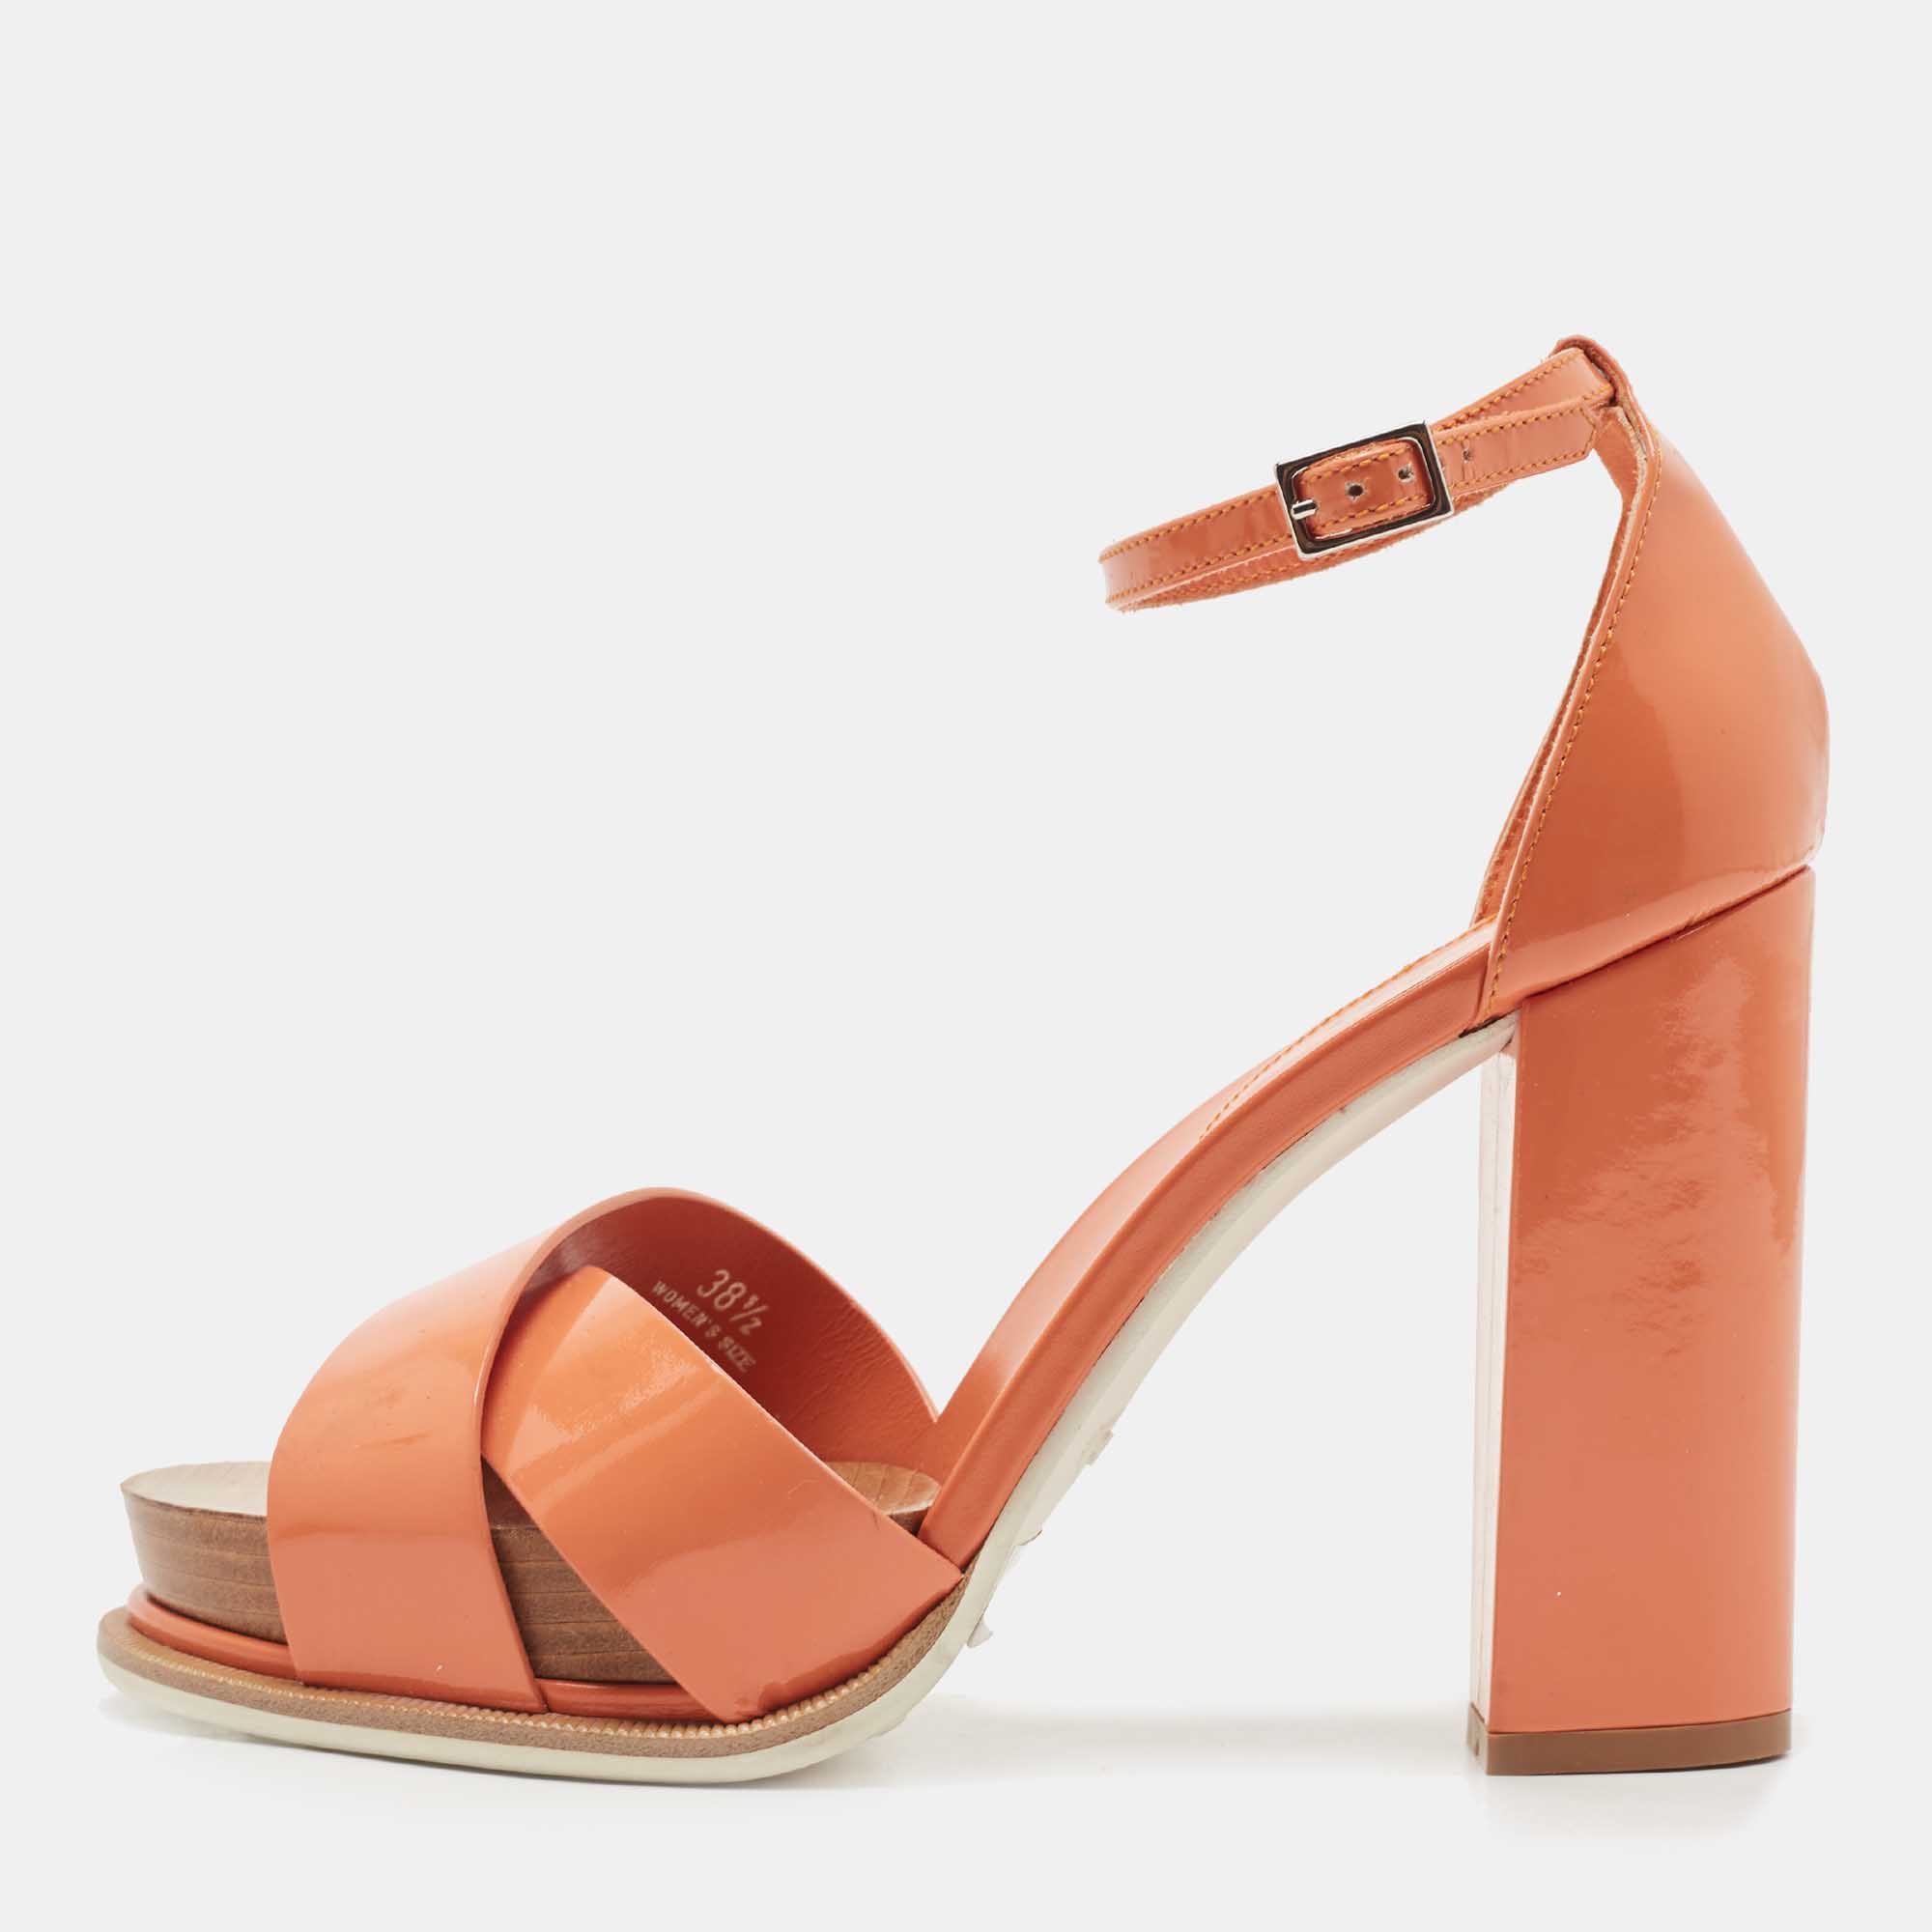 Tod's light orange patent leather block heel ankle strap sandals size 38.5